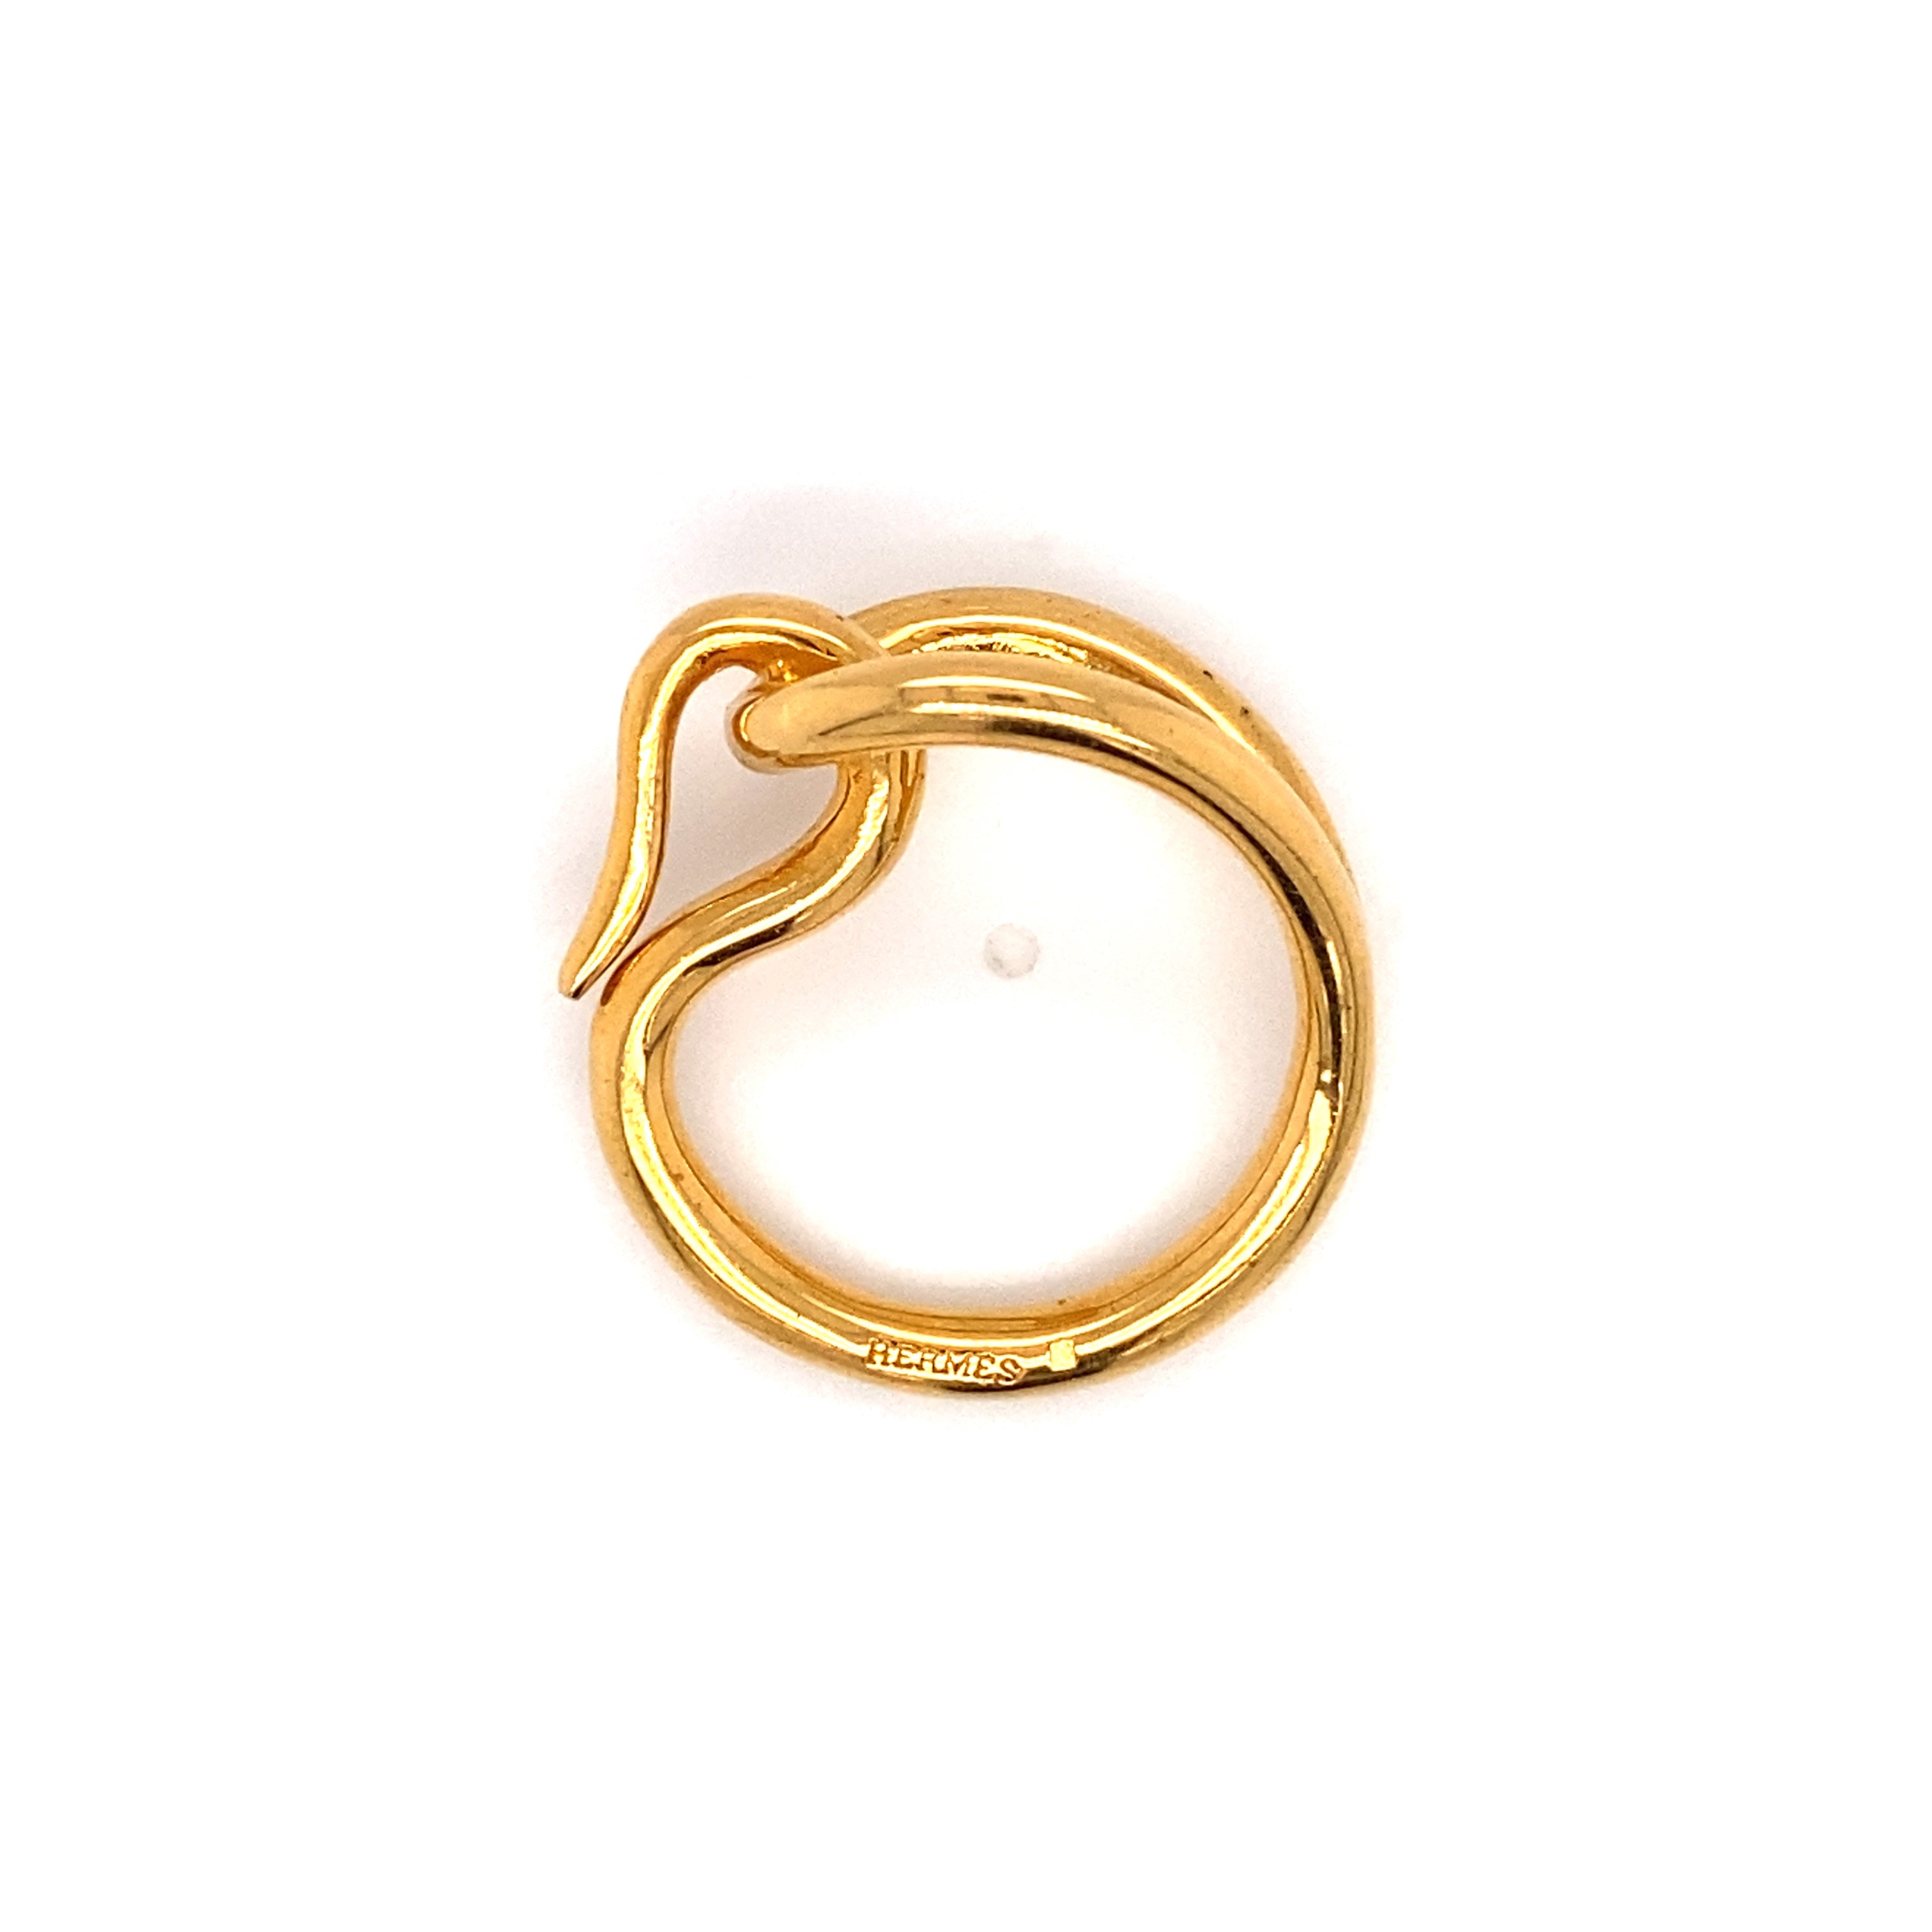 Vintage HERMES Scarf Ring Bouet Circle Design Gold Tone Excellent+ no box